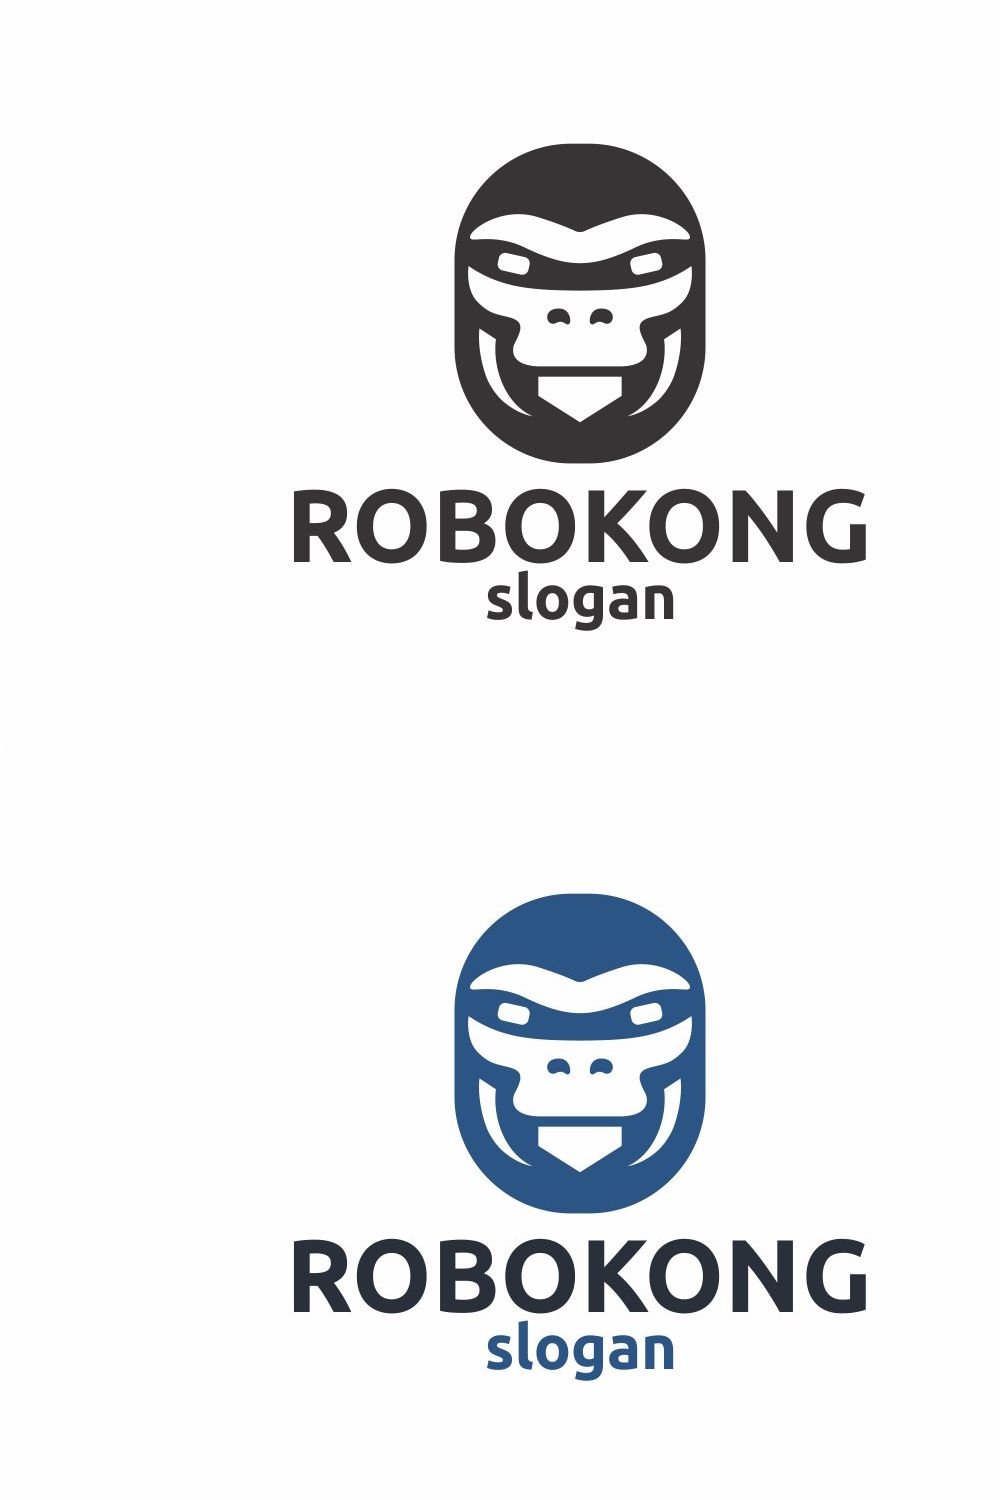 Robot Gorilla Logo pinterest preview image.